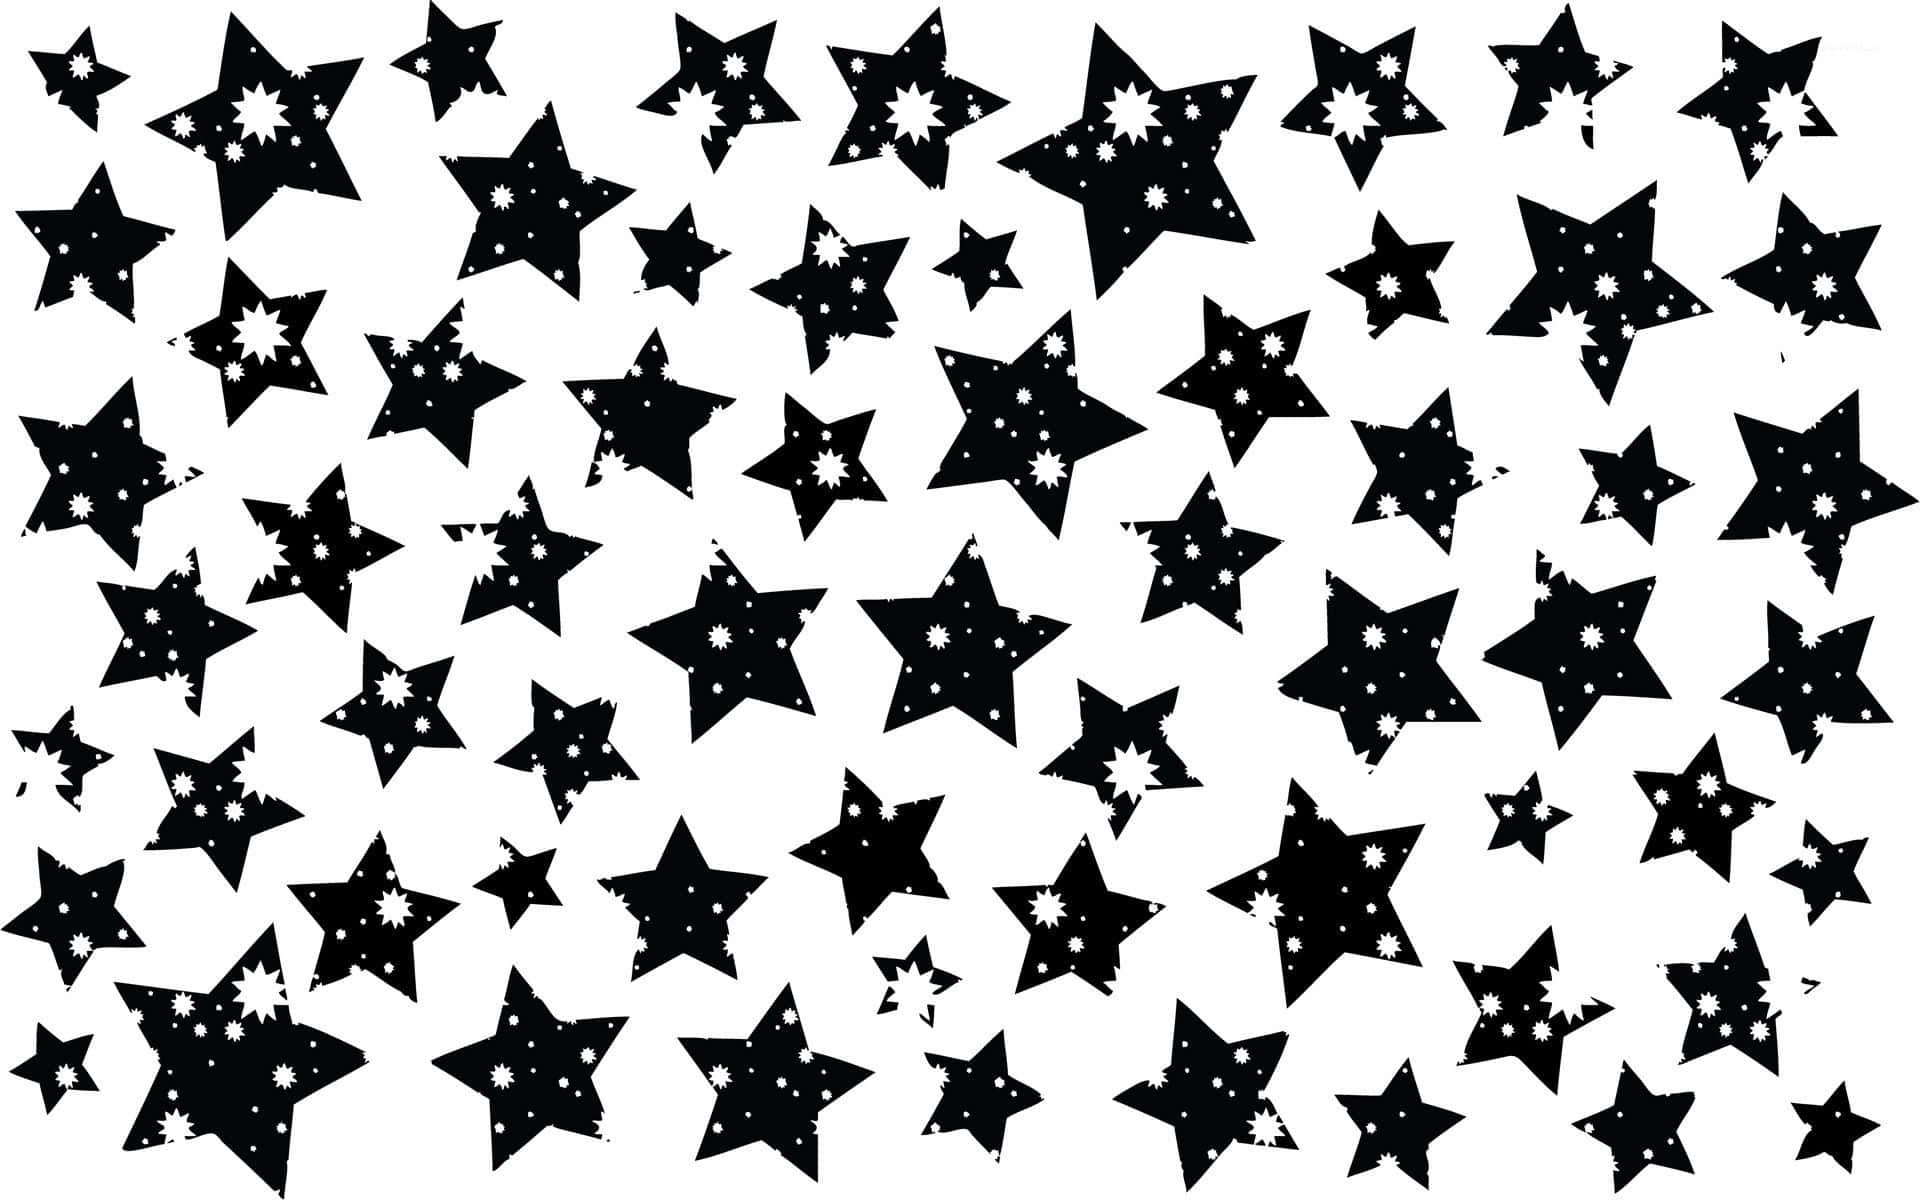 Caption: Captivating Black and White Star Wallpaper Wallpaper